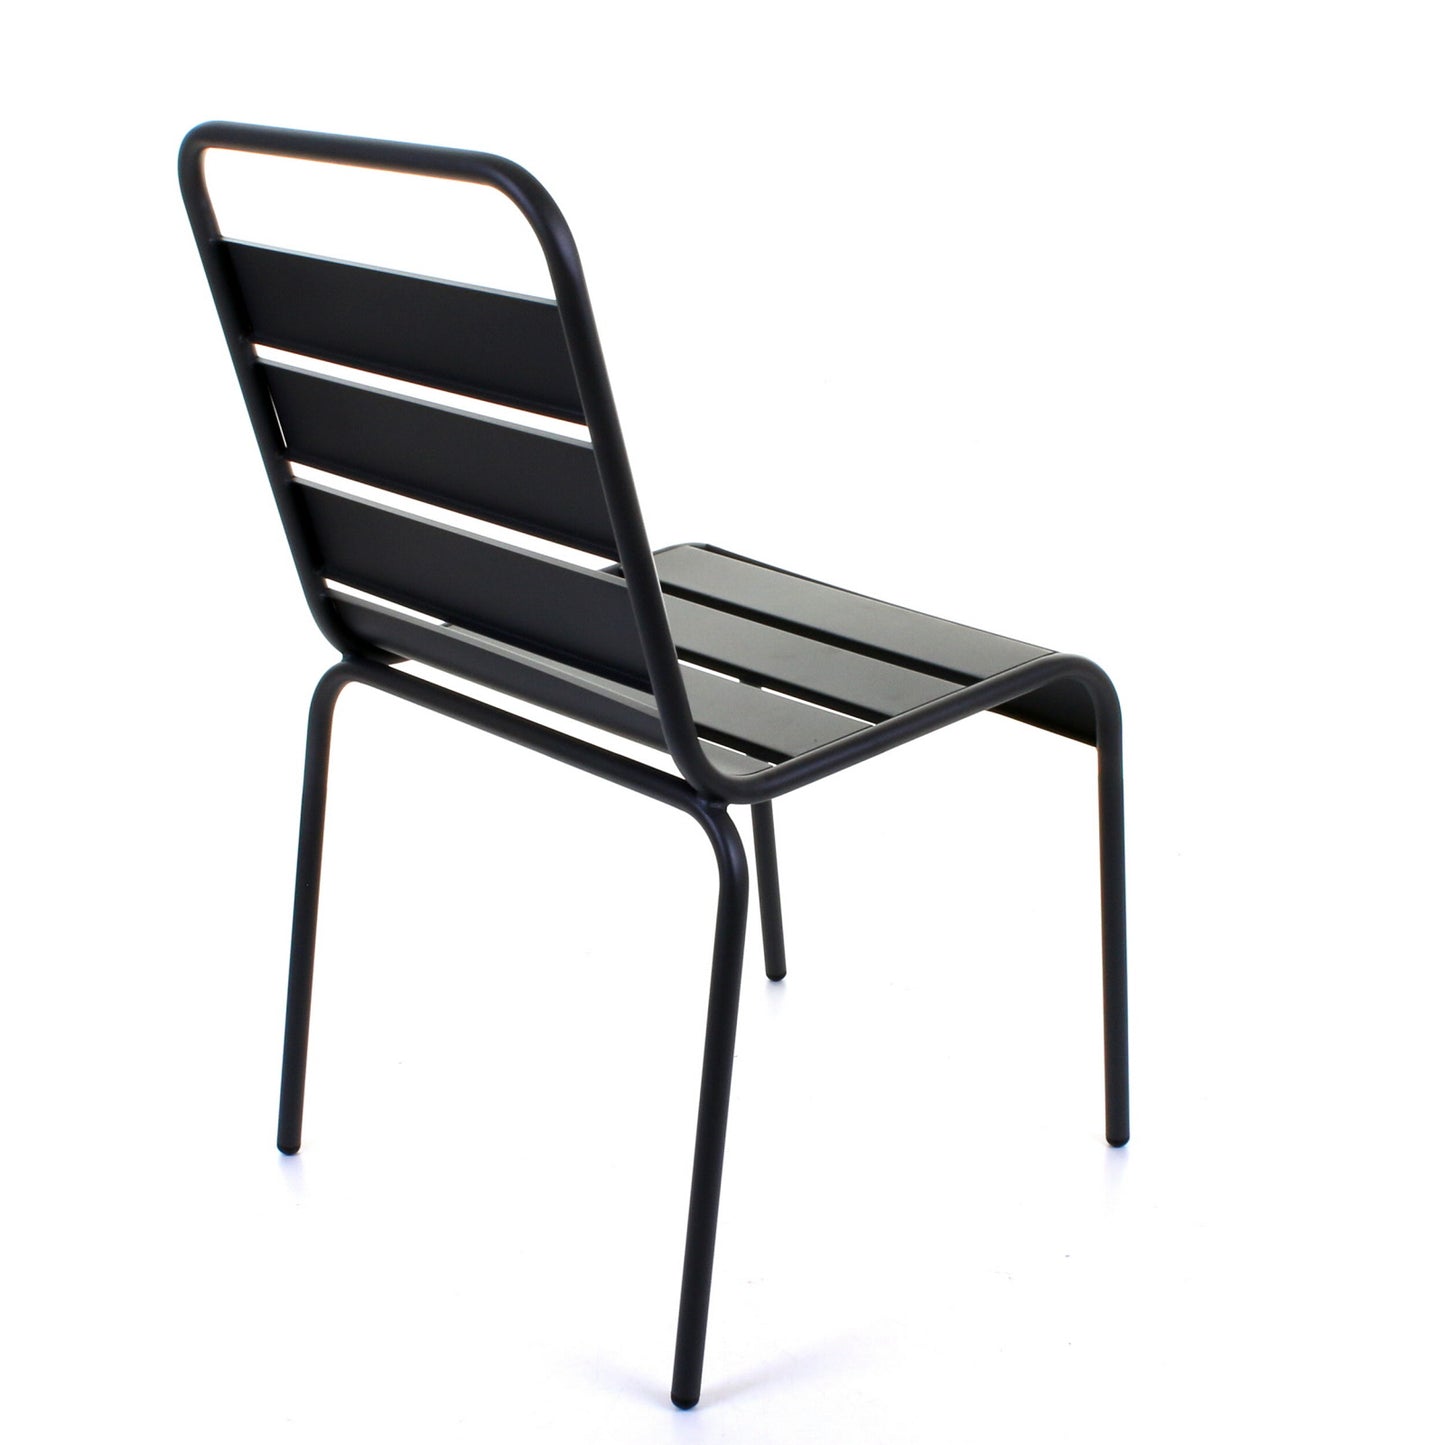 Slatted Bistro Chair - Sand Grey